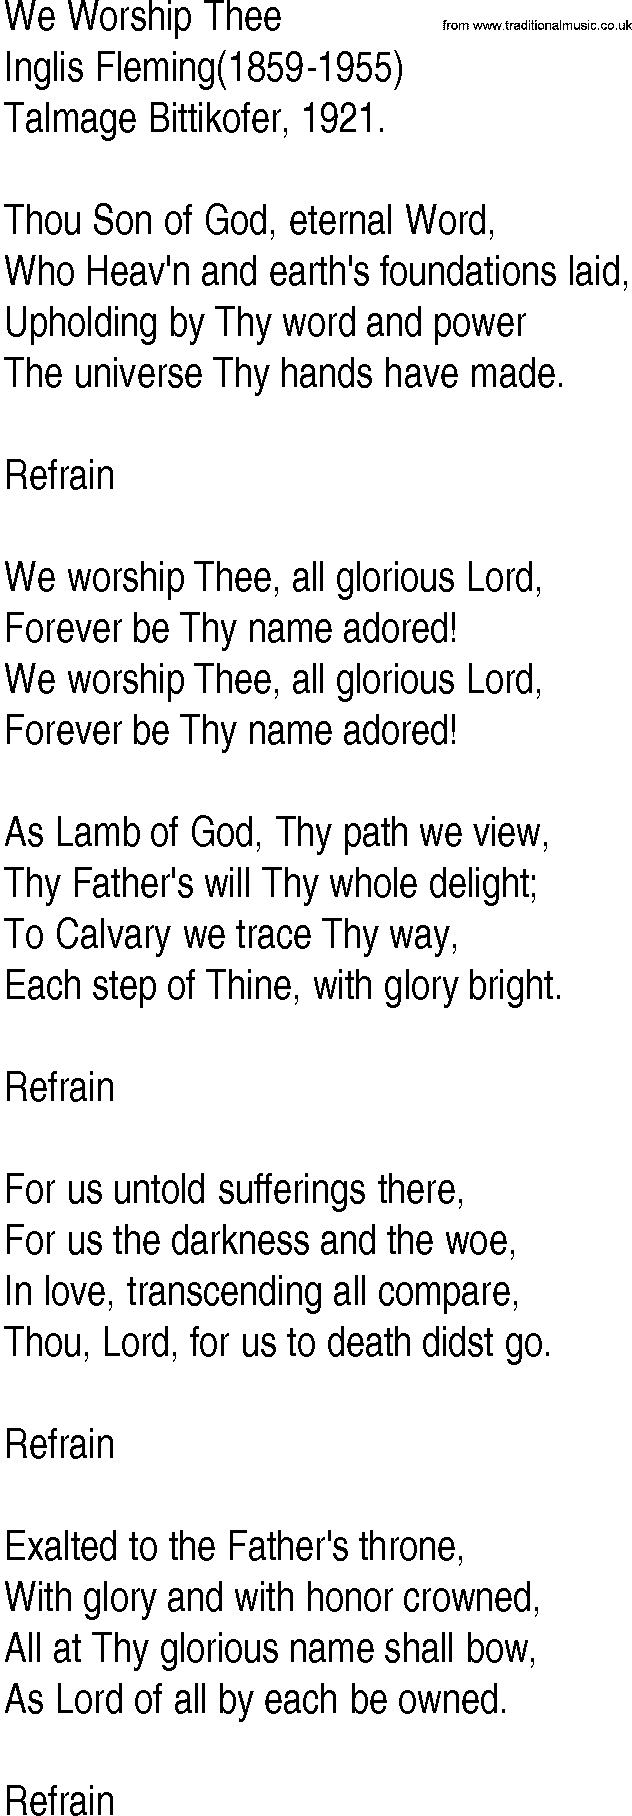 Hymn and Gospel Song: We Worship Thee by Inglis Fleming lyrics